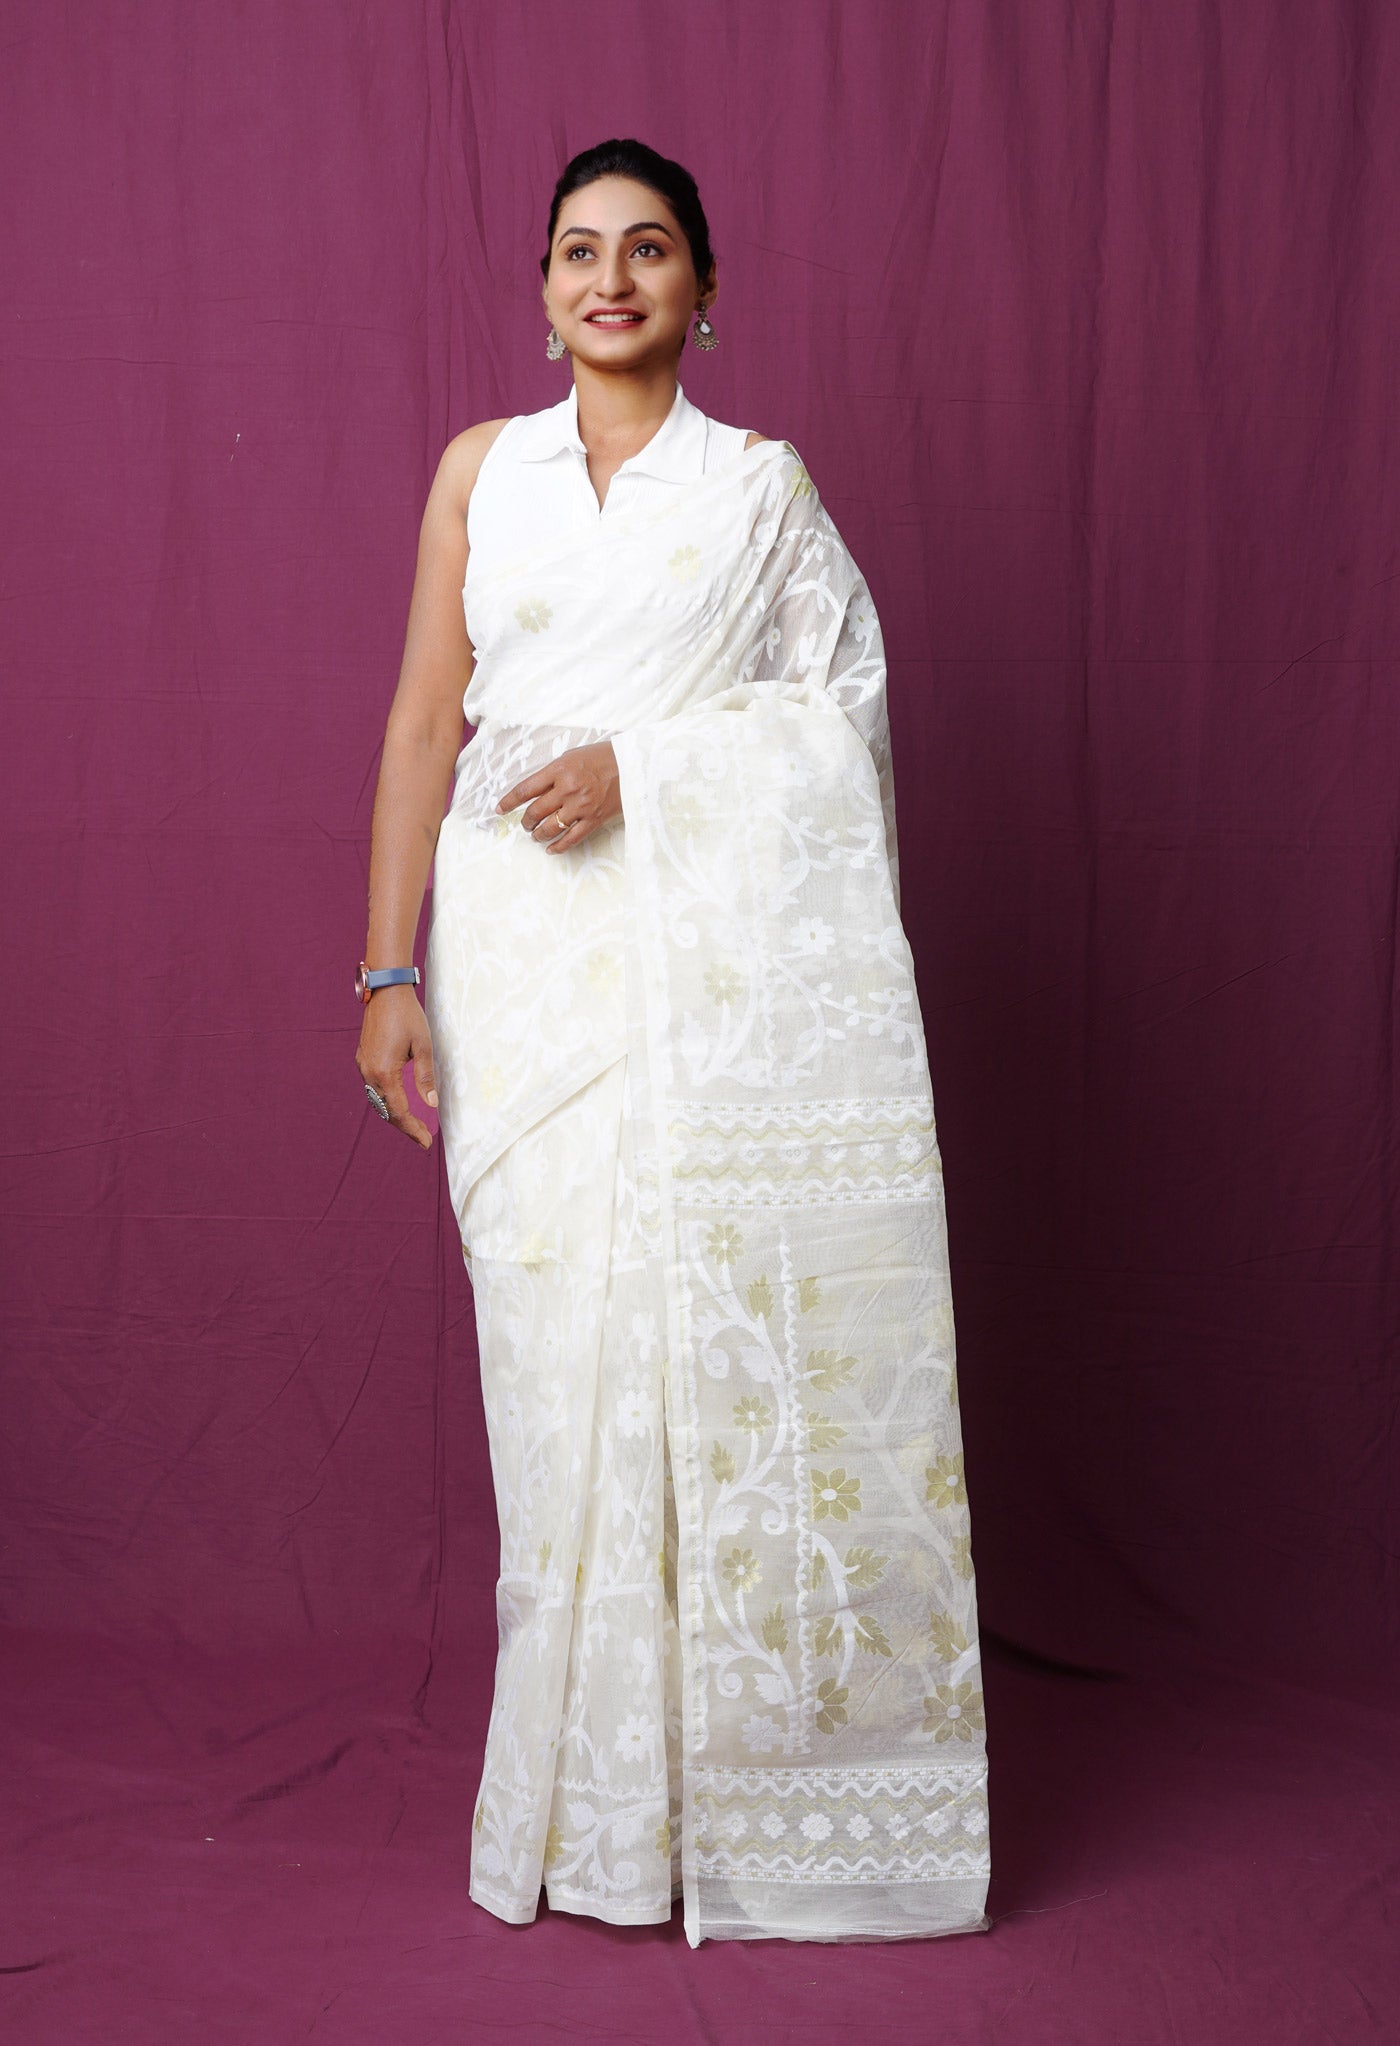 Amazon Cotton Saree: बहुत ही हल्के कॉटन से बनी हैं ये साड़ियां, कंफर्ट के  साथ देंगी ट्रेडिशनल लुक - amazon cotton saree below 1000 to get comfort and  traditional style - Navbharat Times